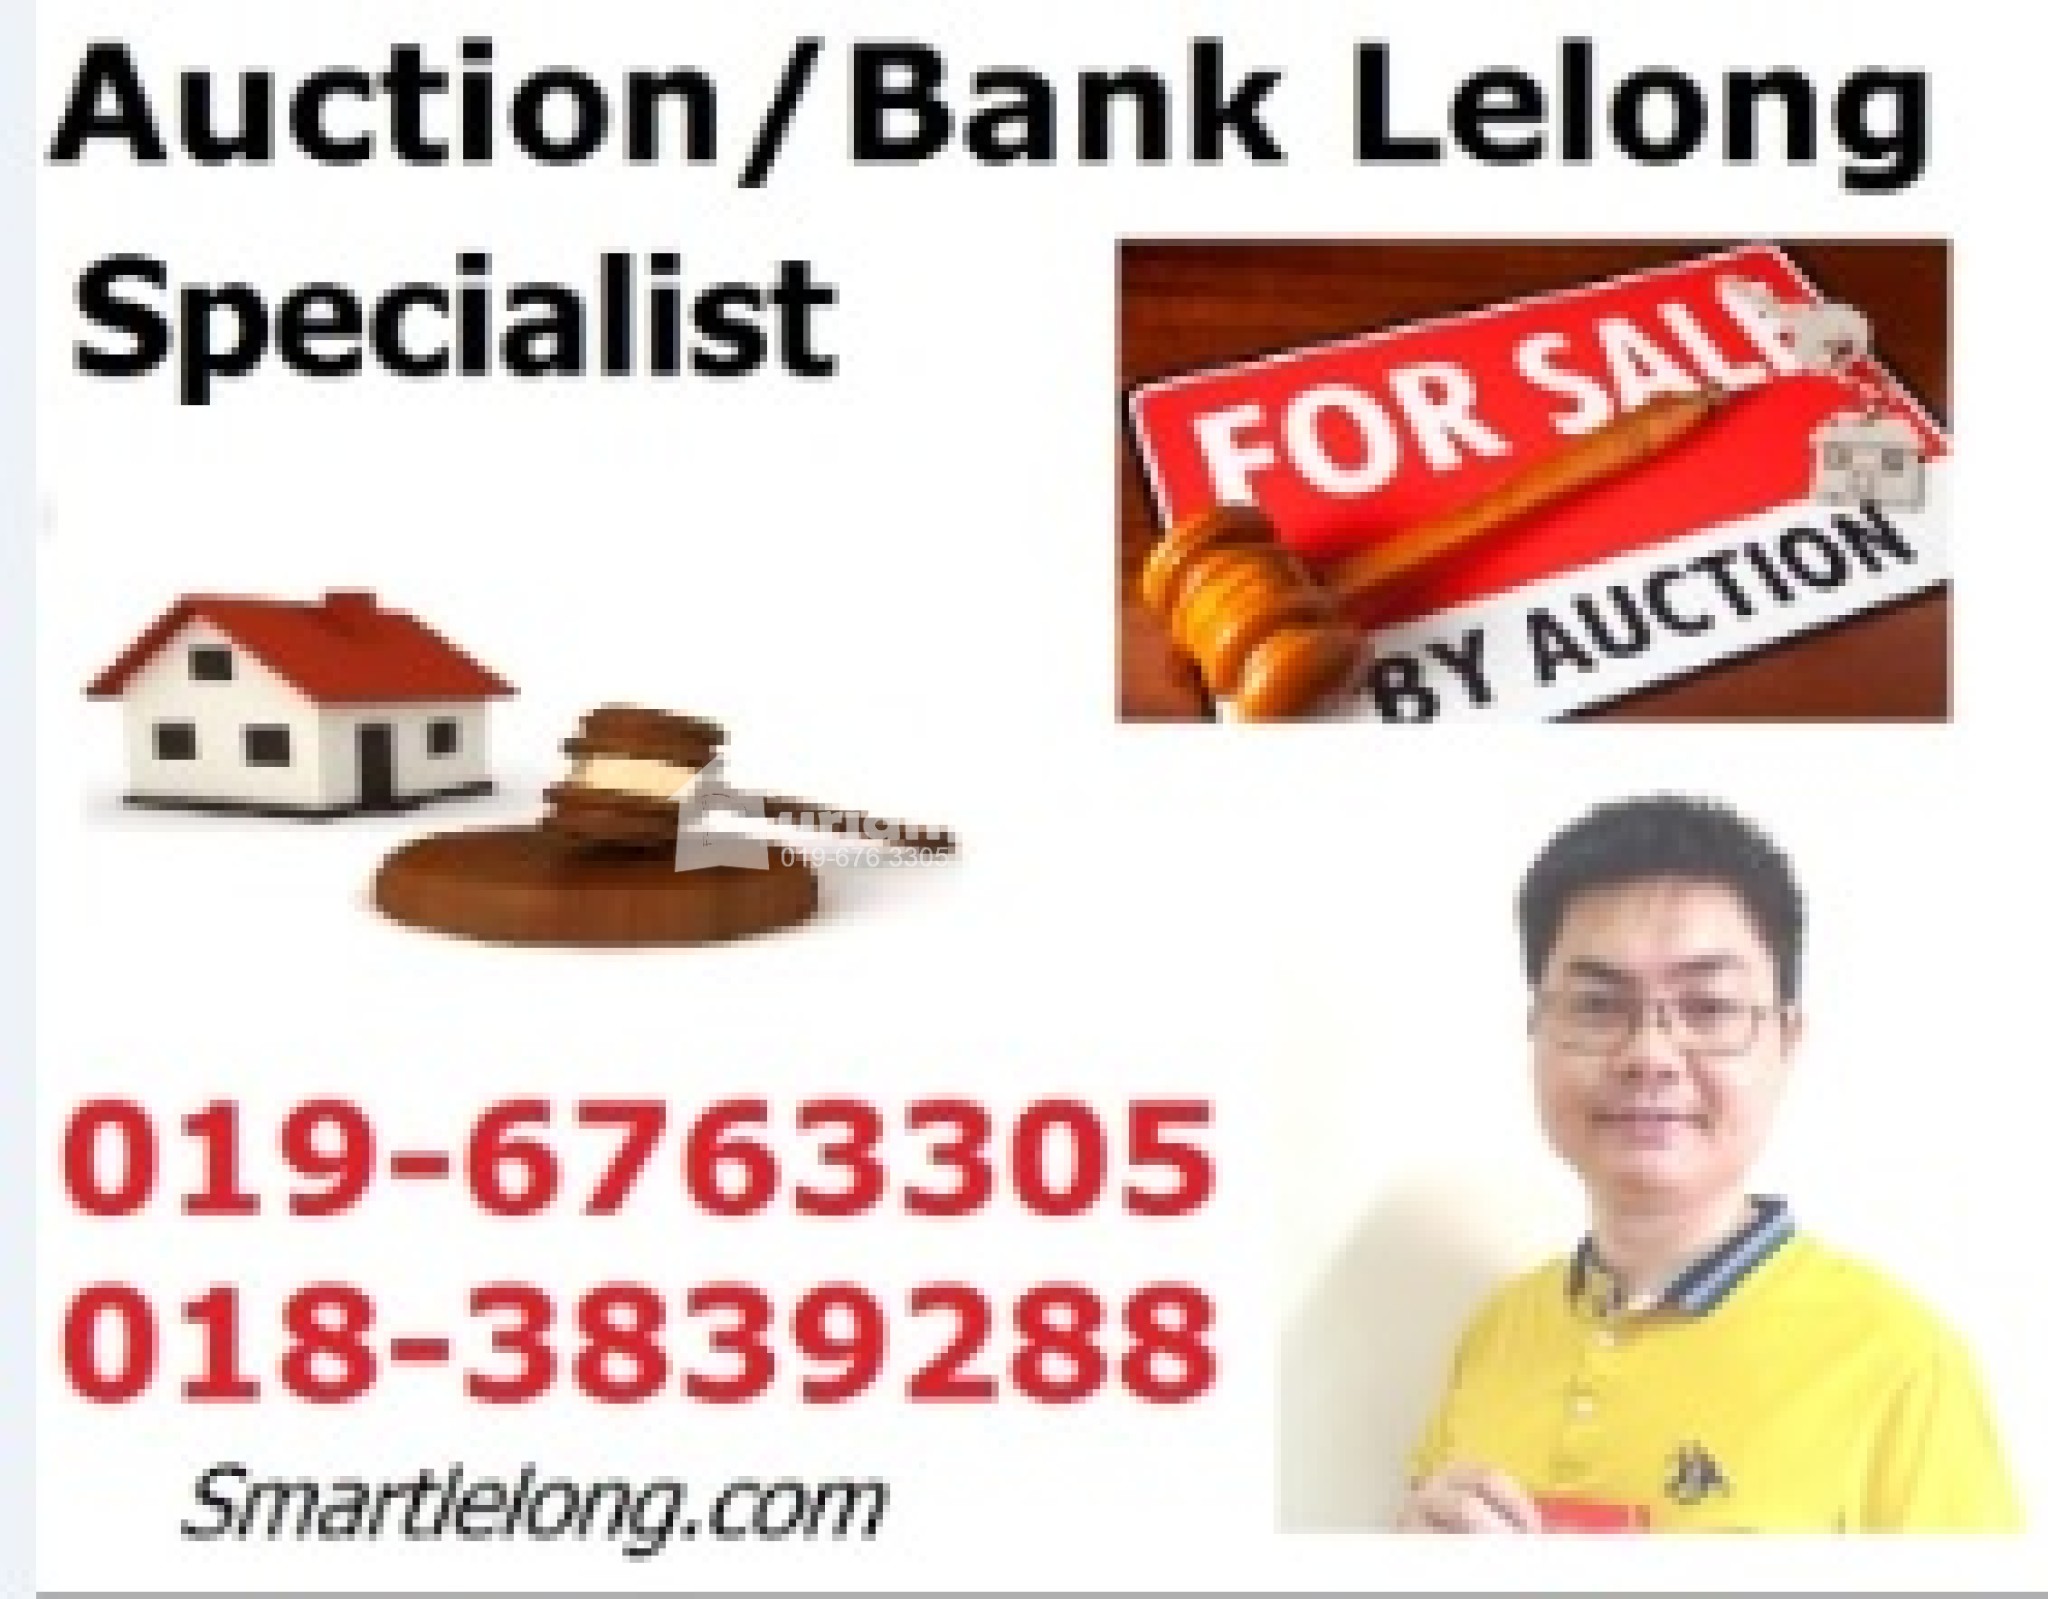 Terrace House For Auction at Bandar Seri Botani